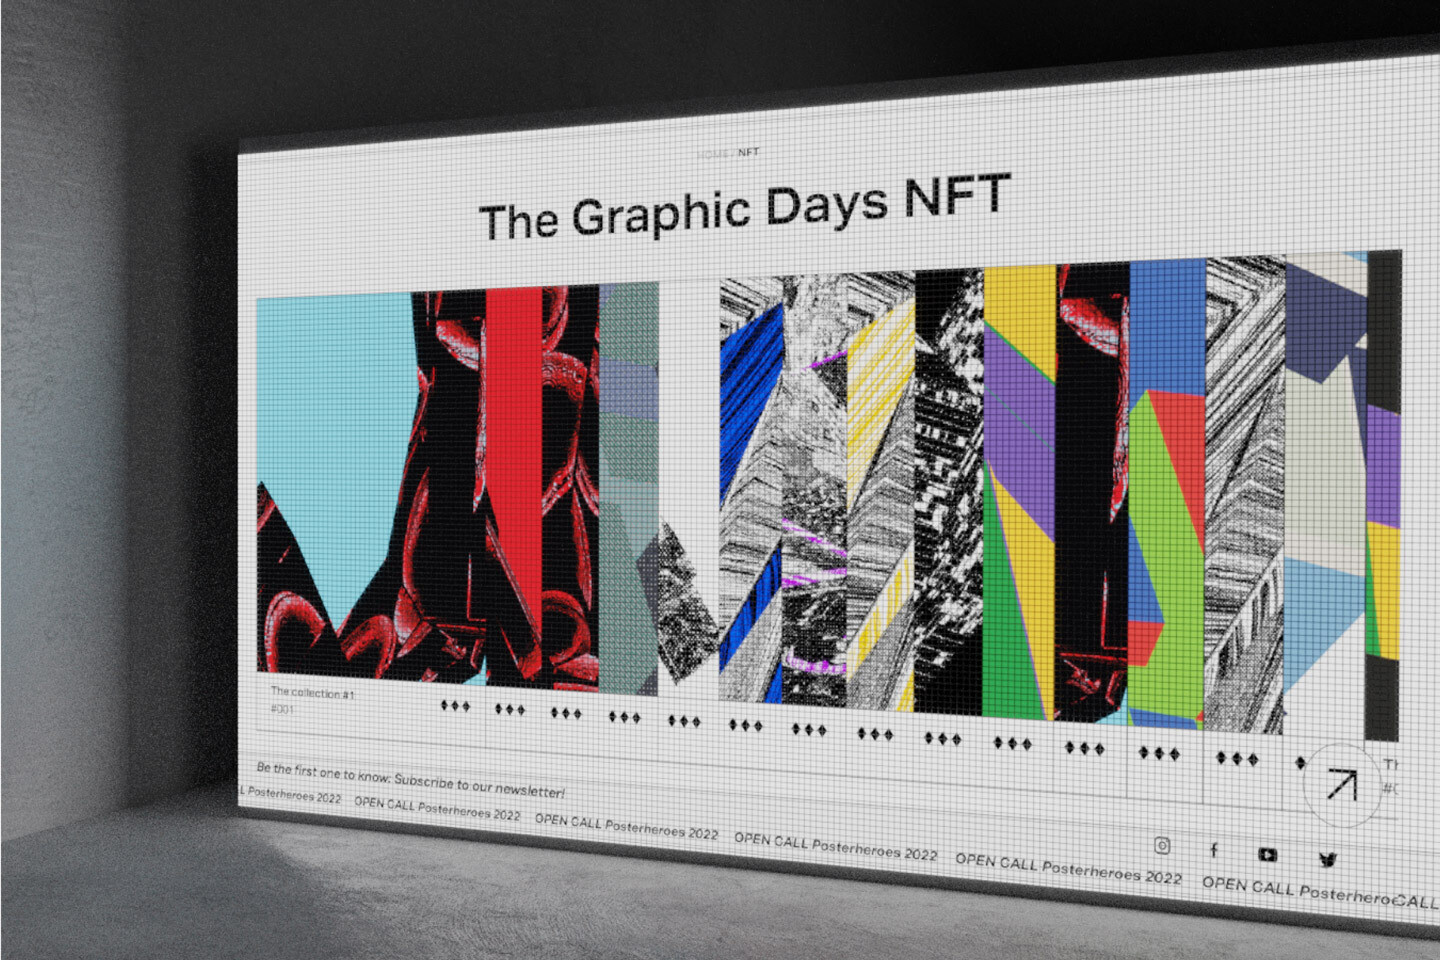 Graphic Days NFT